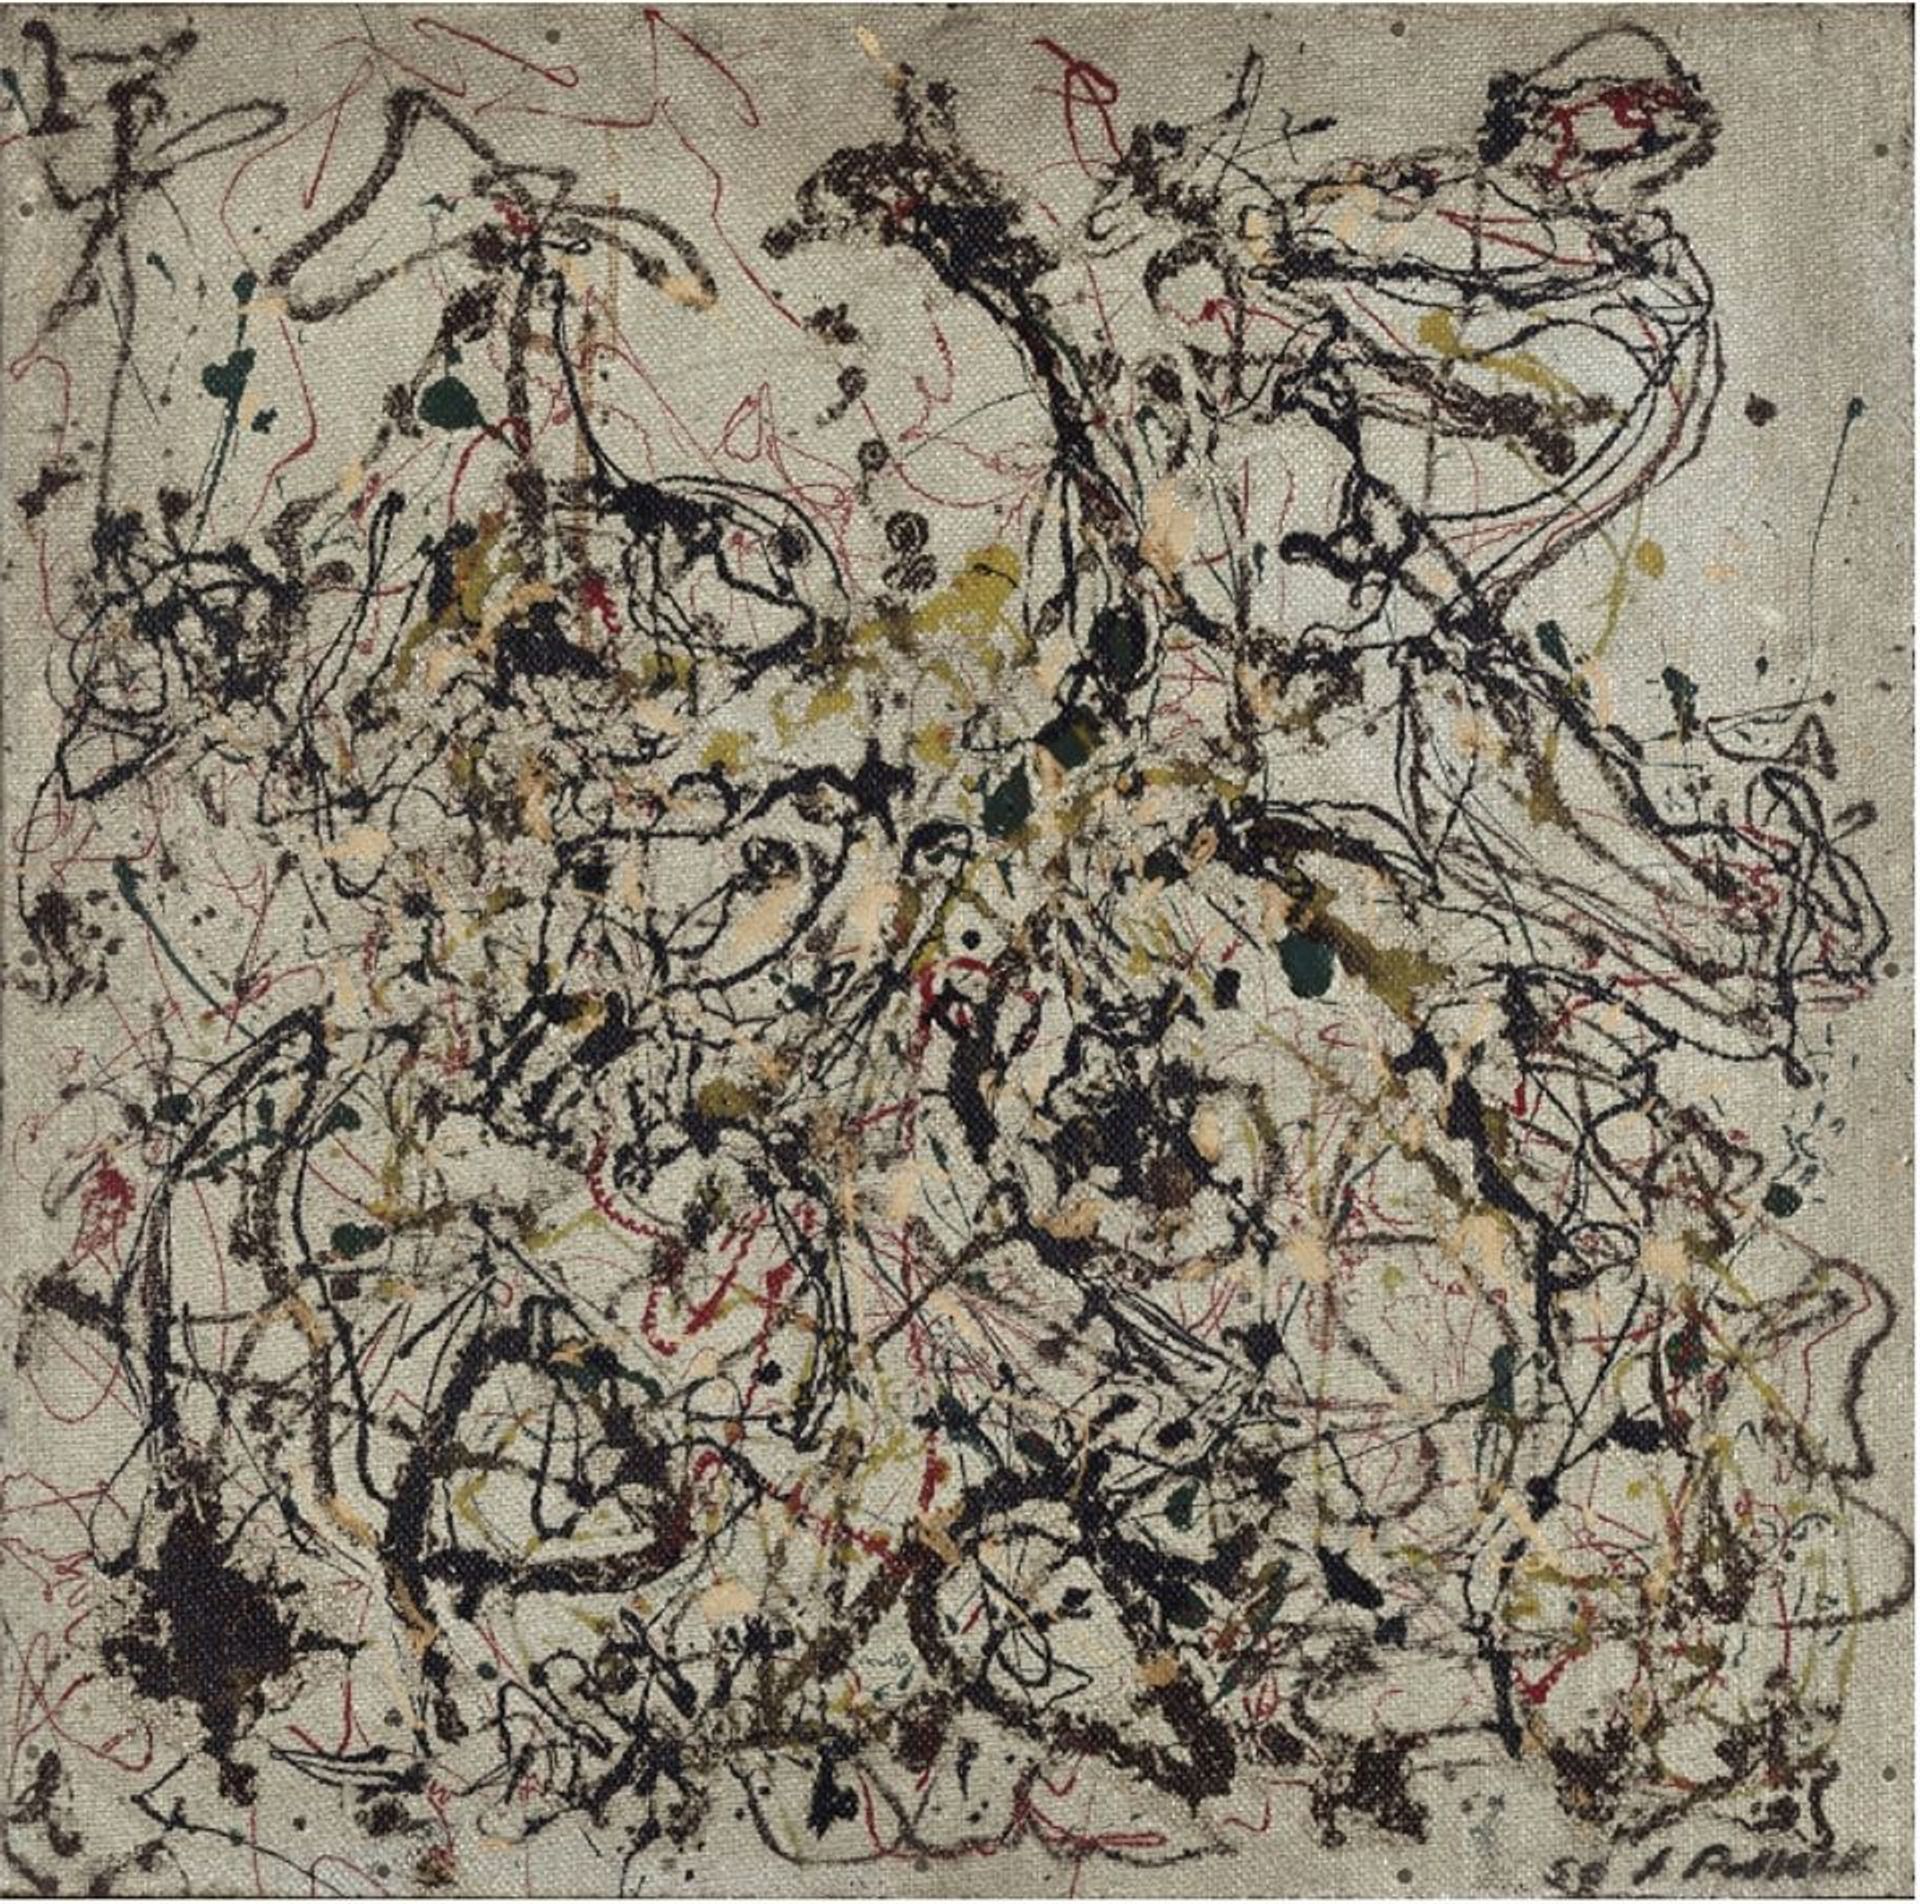 Jackson Pollock, No. 16, 1950. Courtesy du MAM Rio de Janeiro